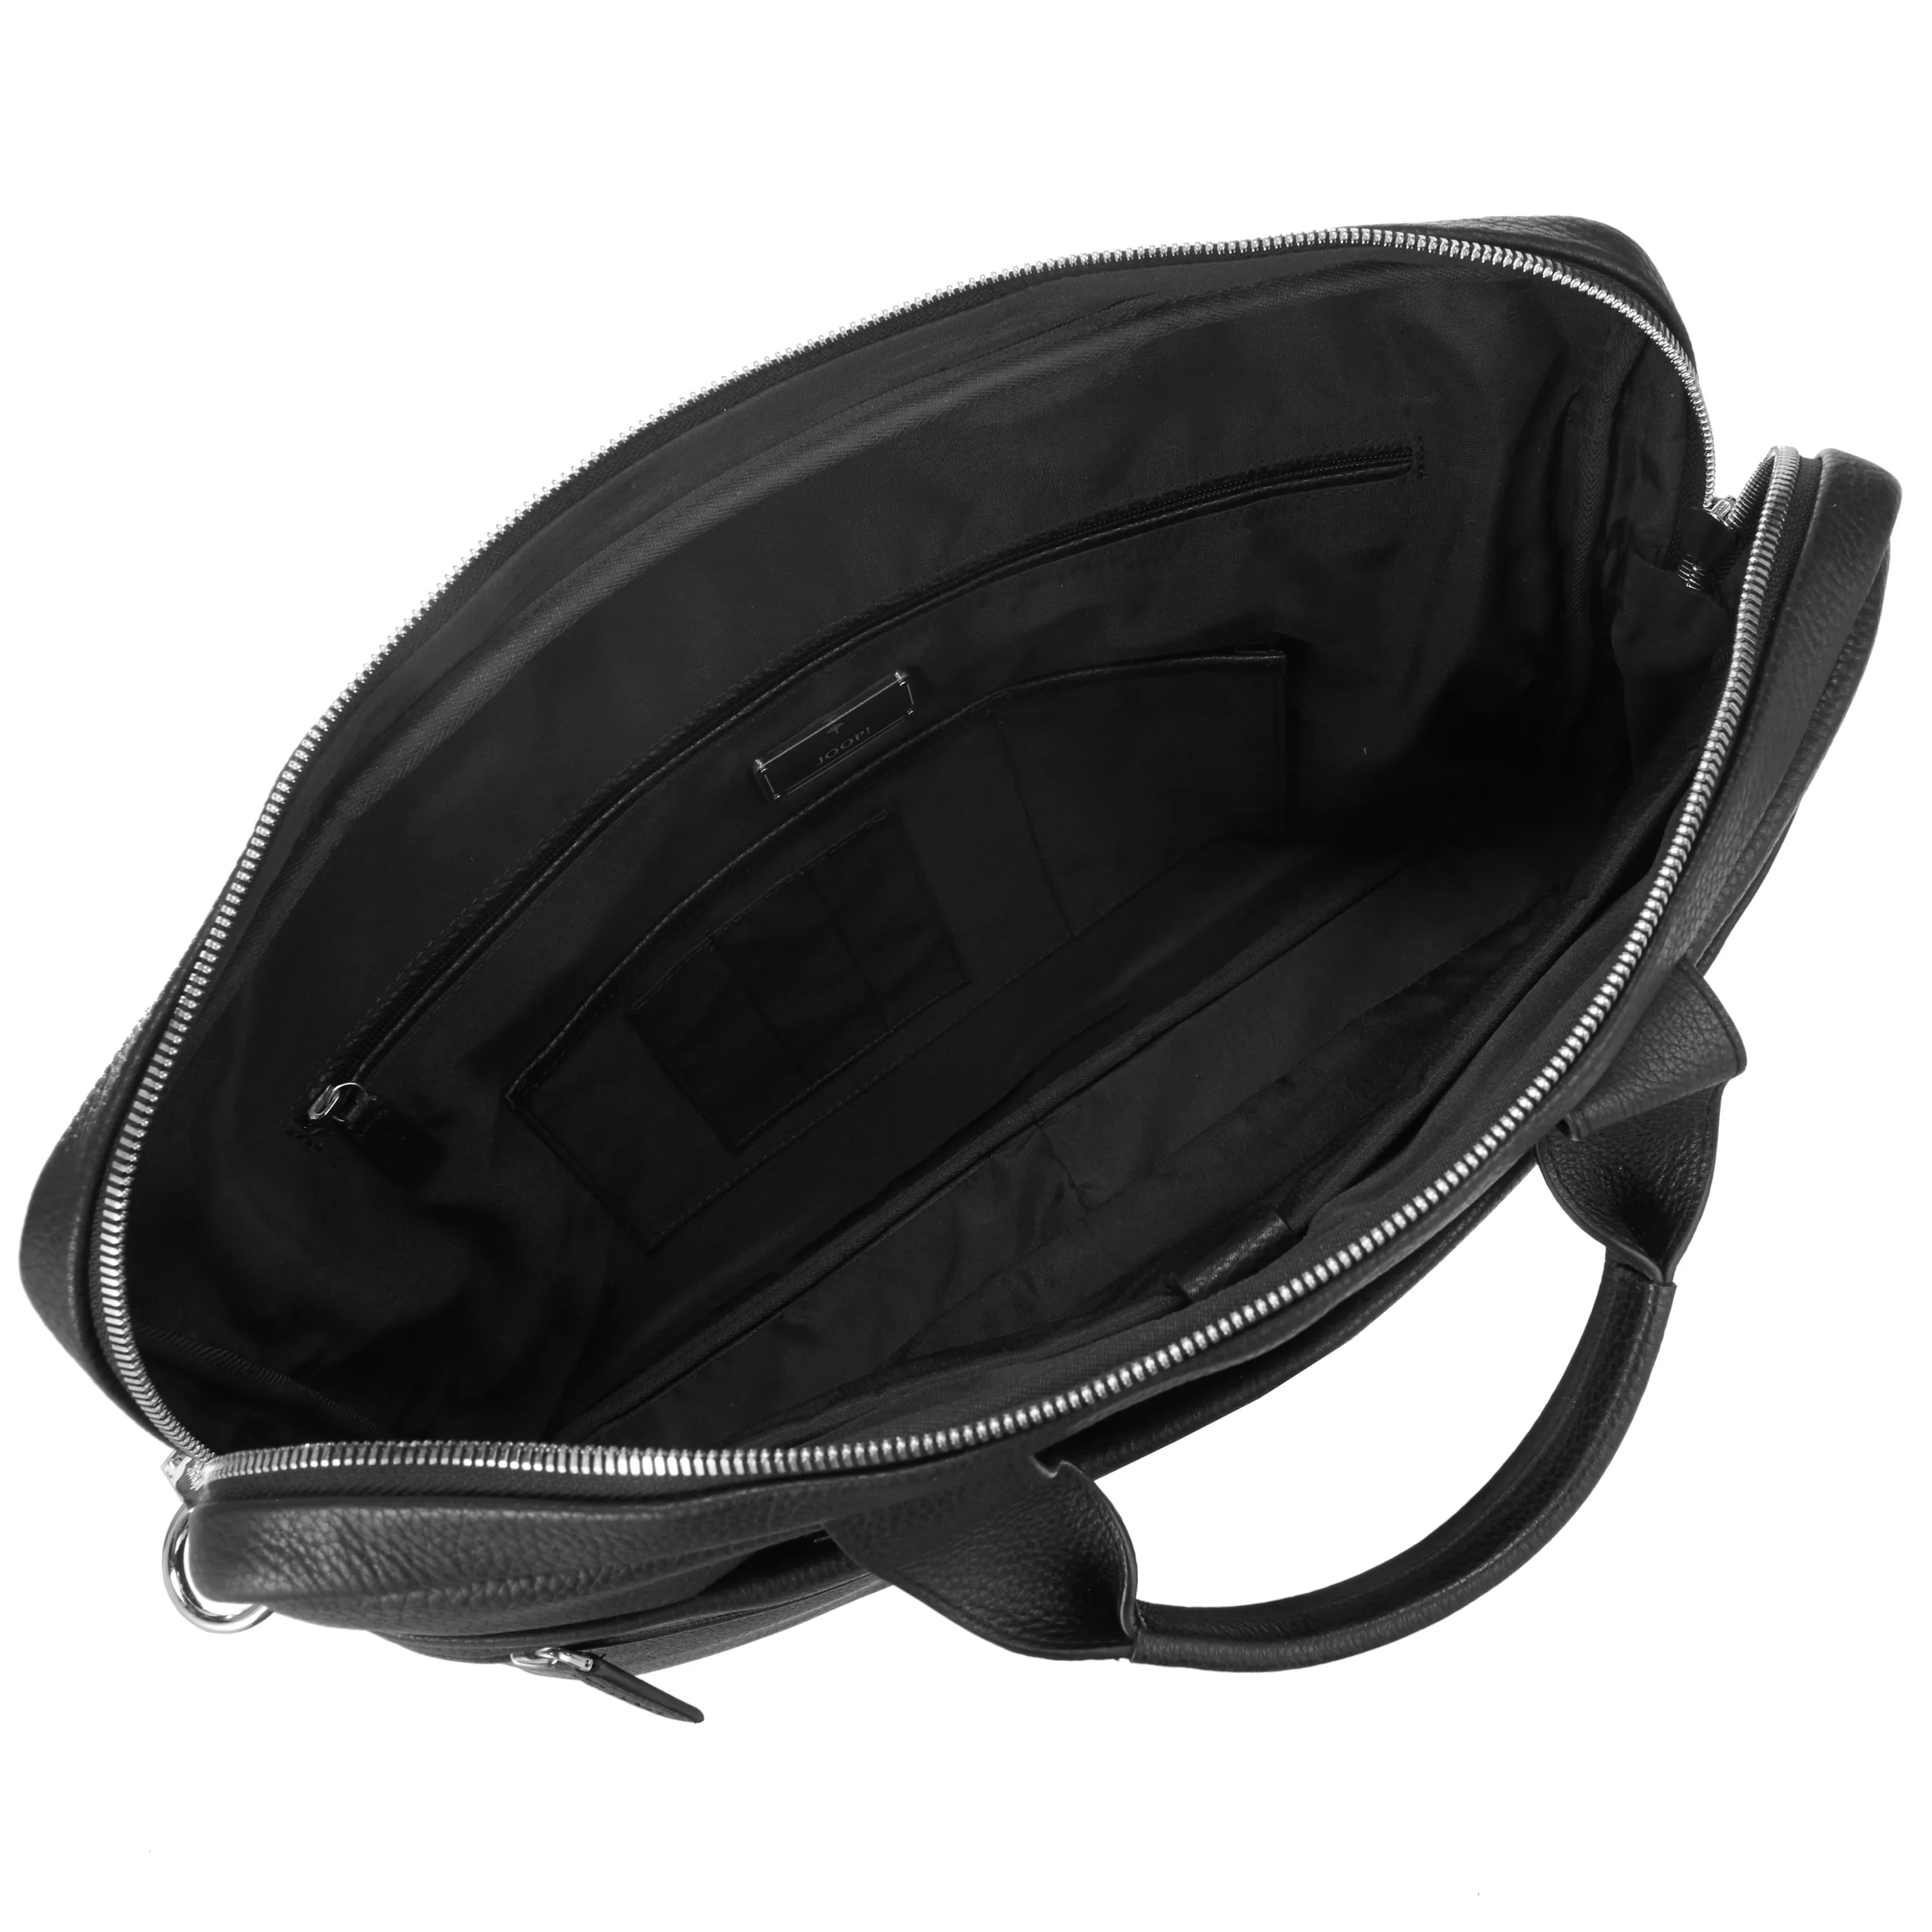 Joop Cardona Pandion Briefbag SHZ 2 44 cm - black